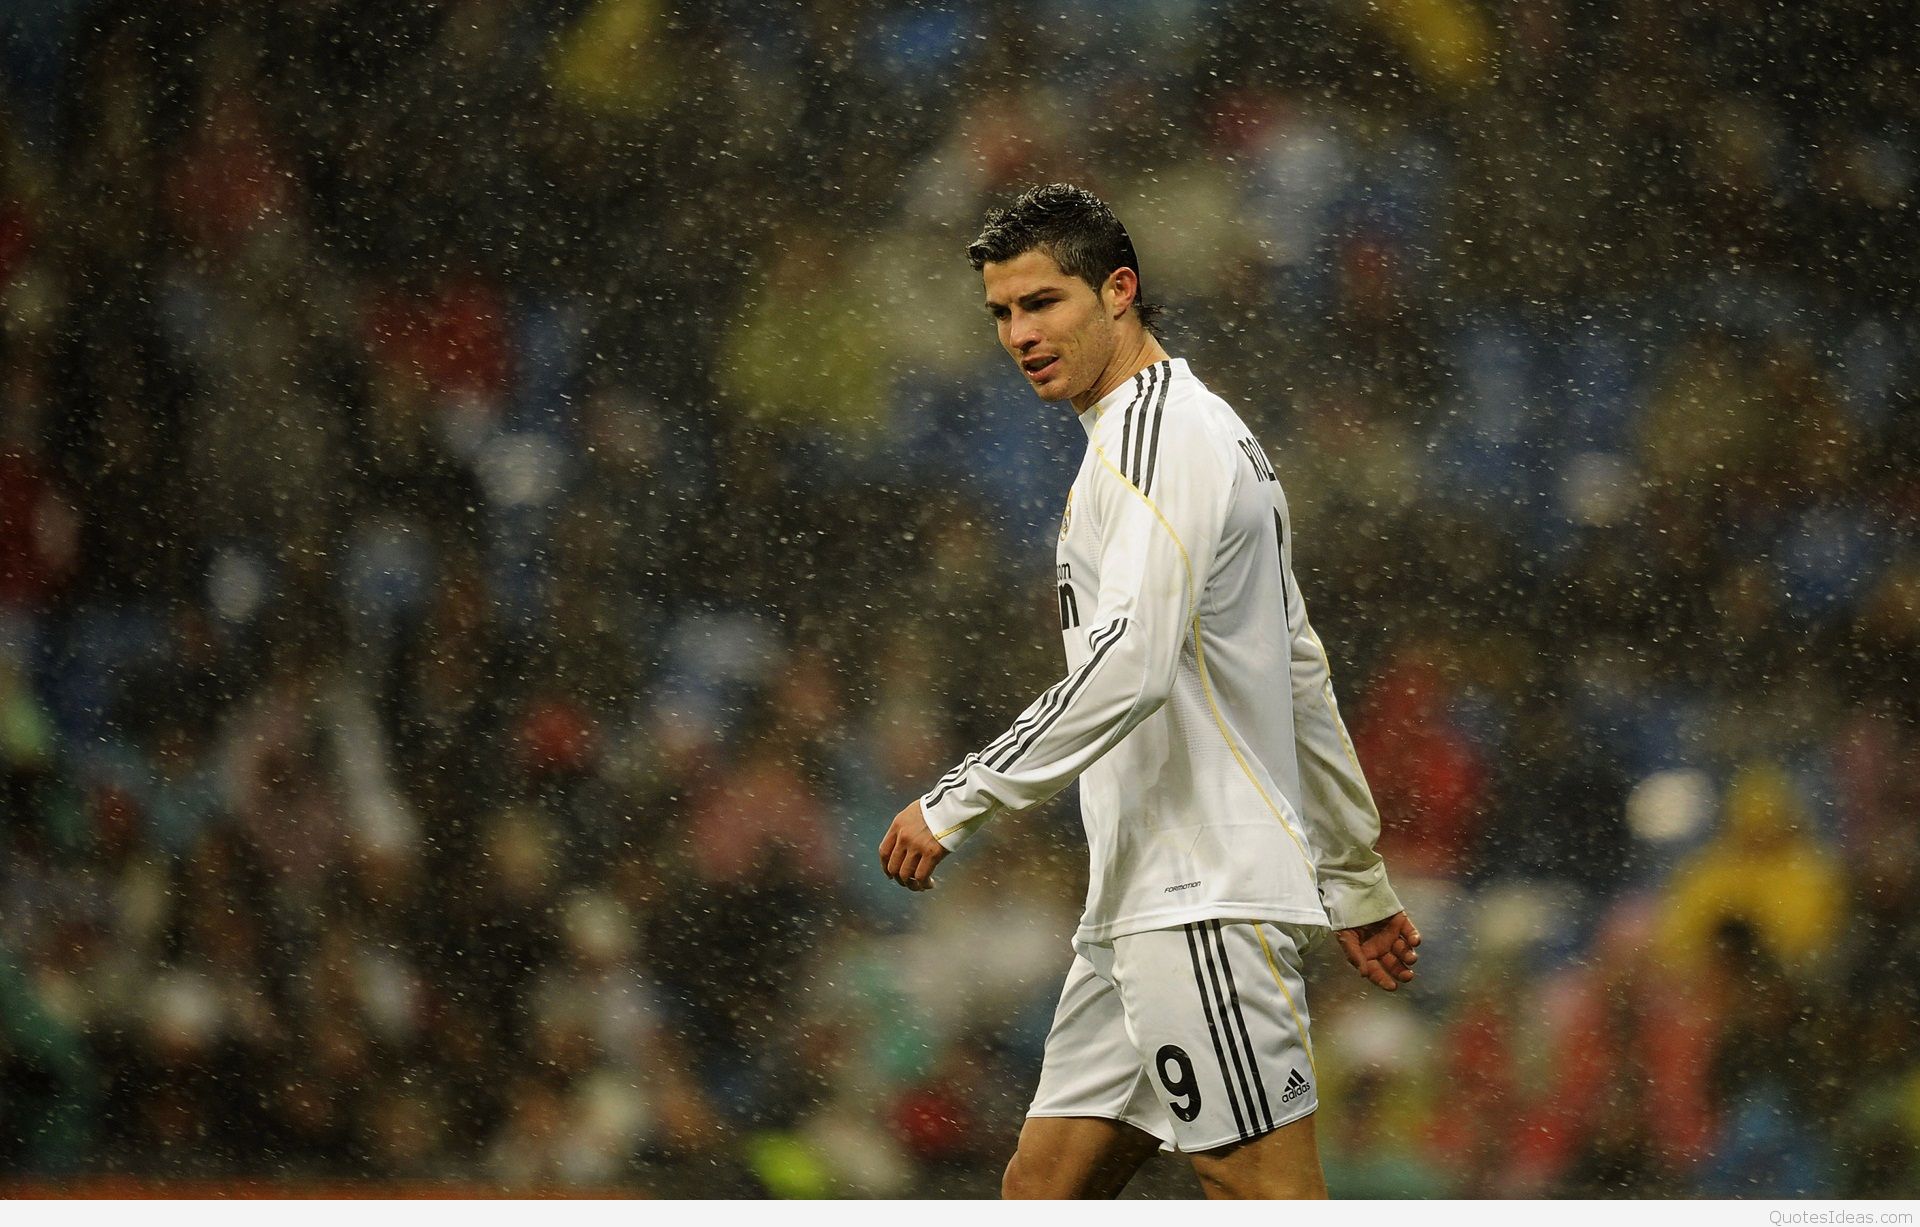 96+] The Best FIFA Cristiano Ronaldo Wallpapers - WallpaperSafari